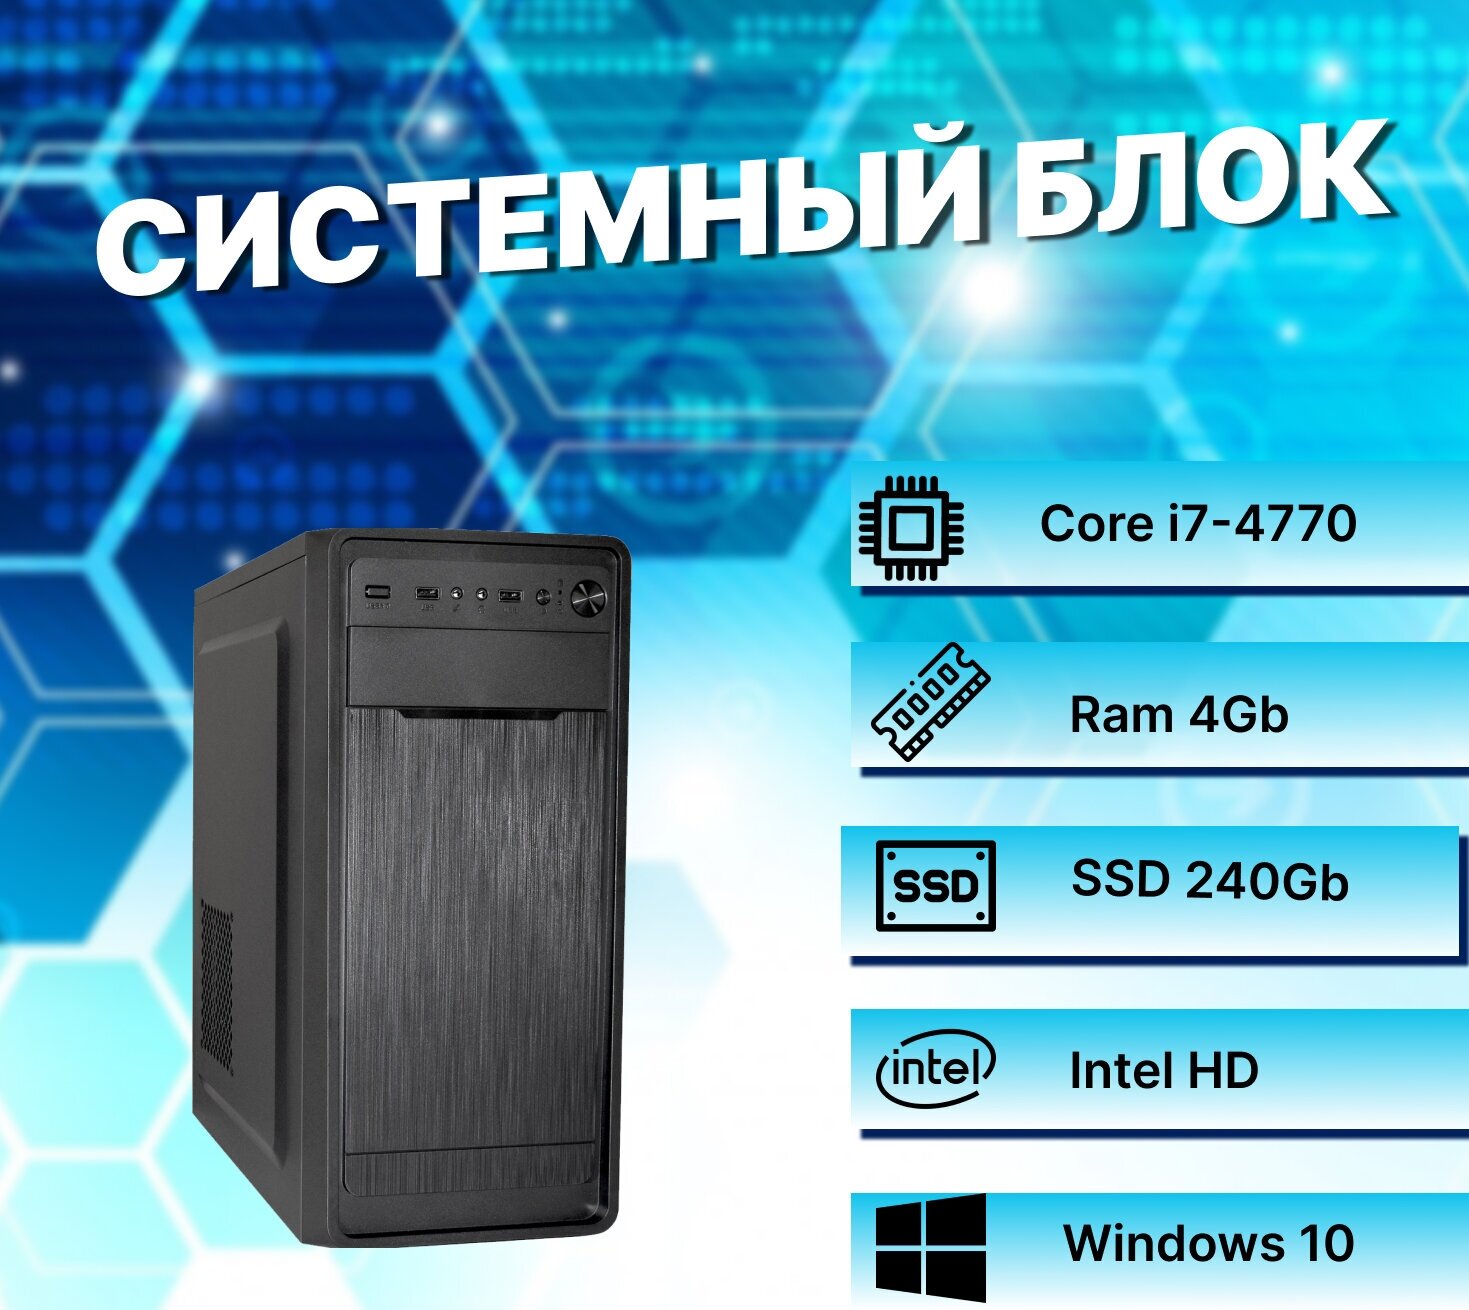 Системный блок Intel Core i7-4770 (3.4ГГц)/ RAM 4Gb/ SSD 240Gb/ Intel HD/ Windows 10 Pro